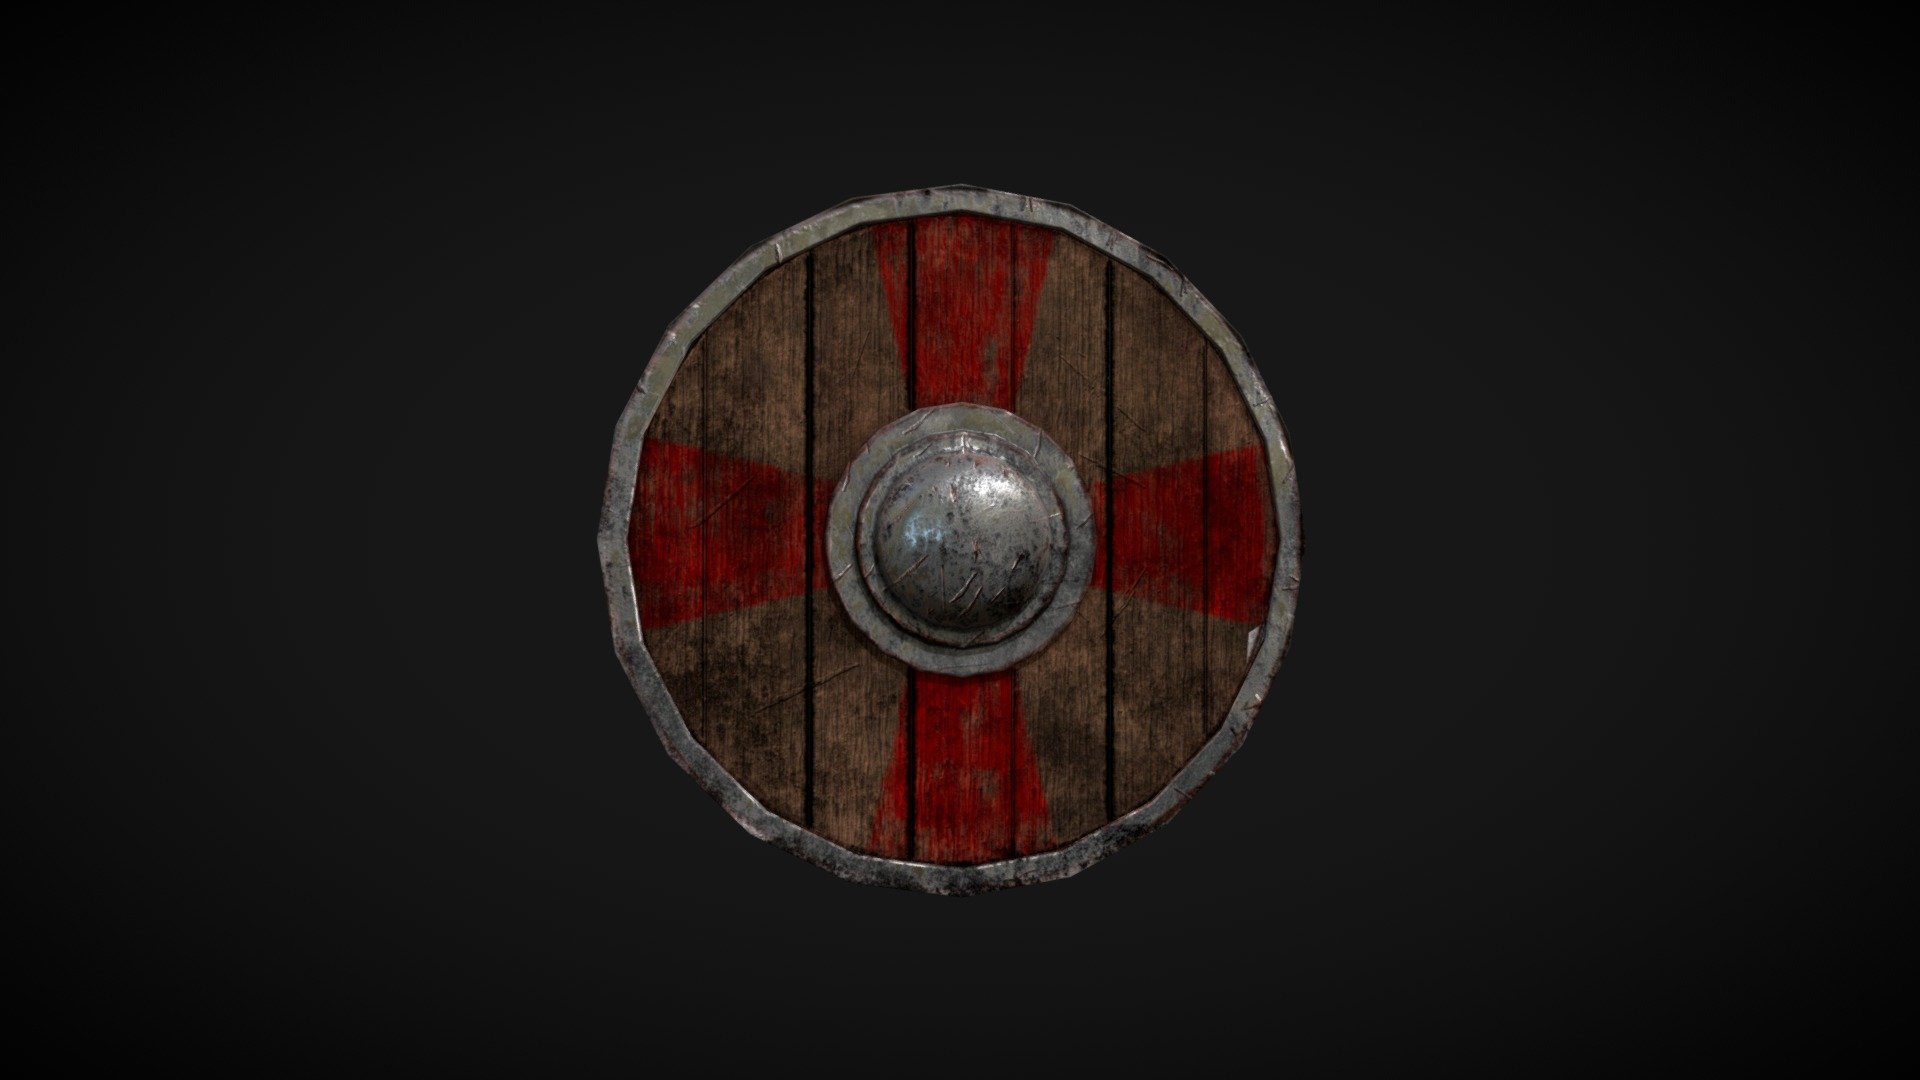 Medieval shield